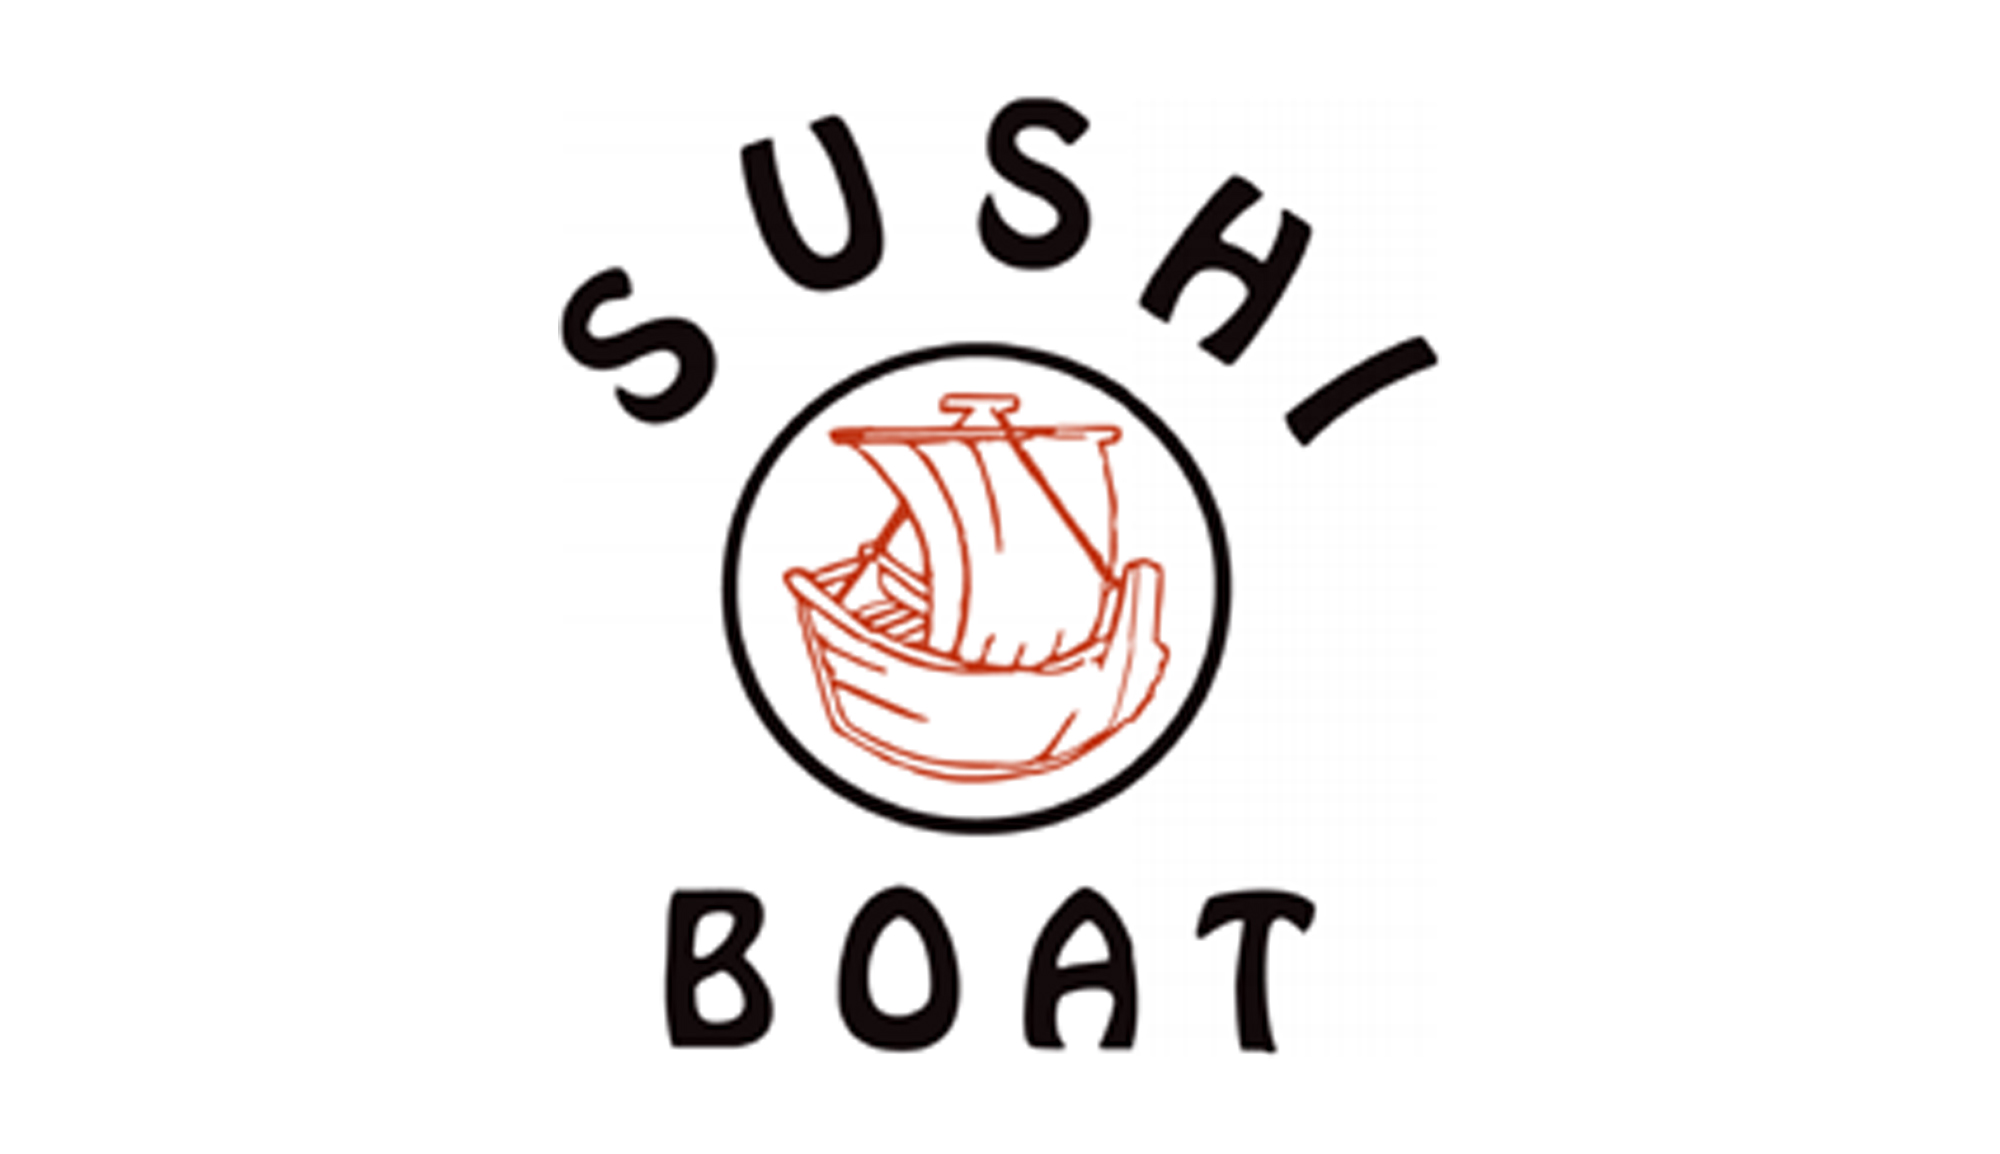 Sushi Boat restaurant logo